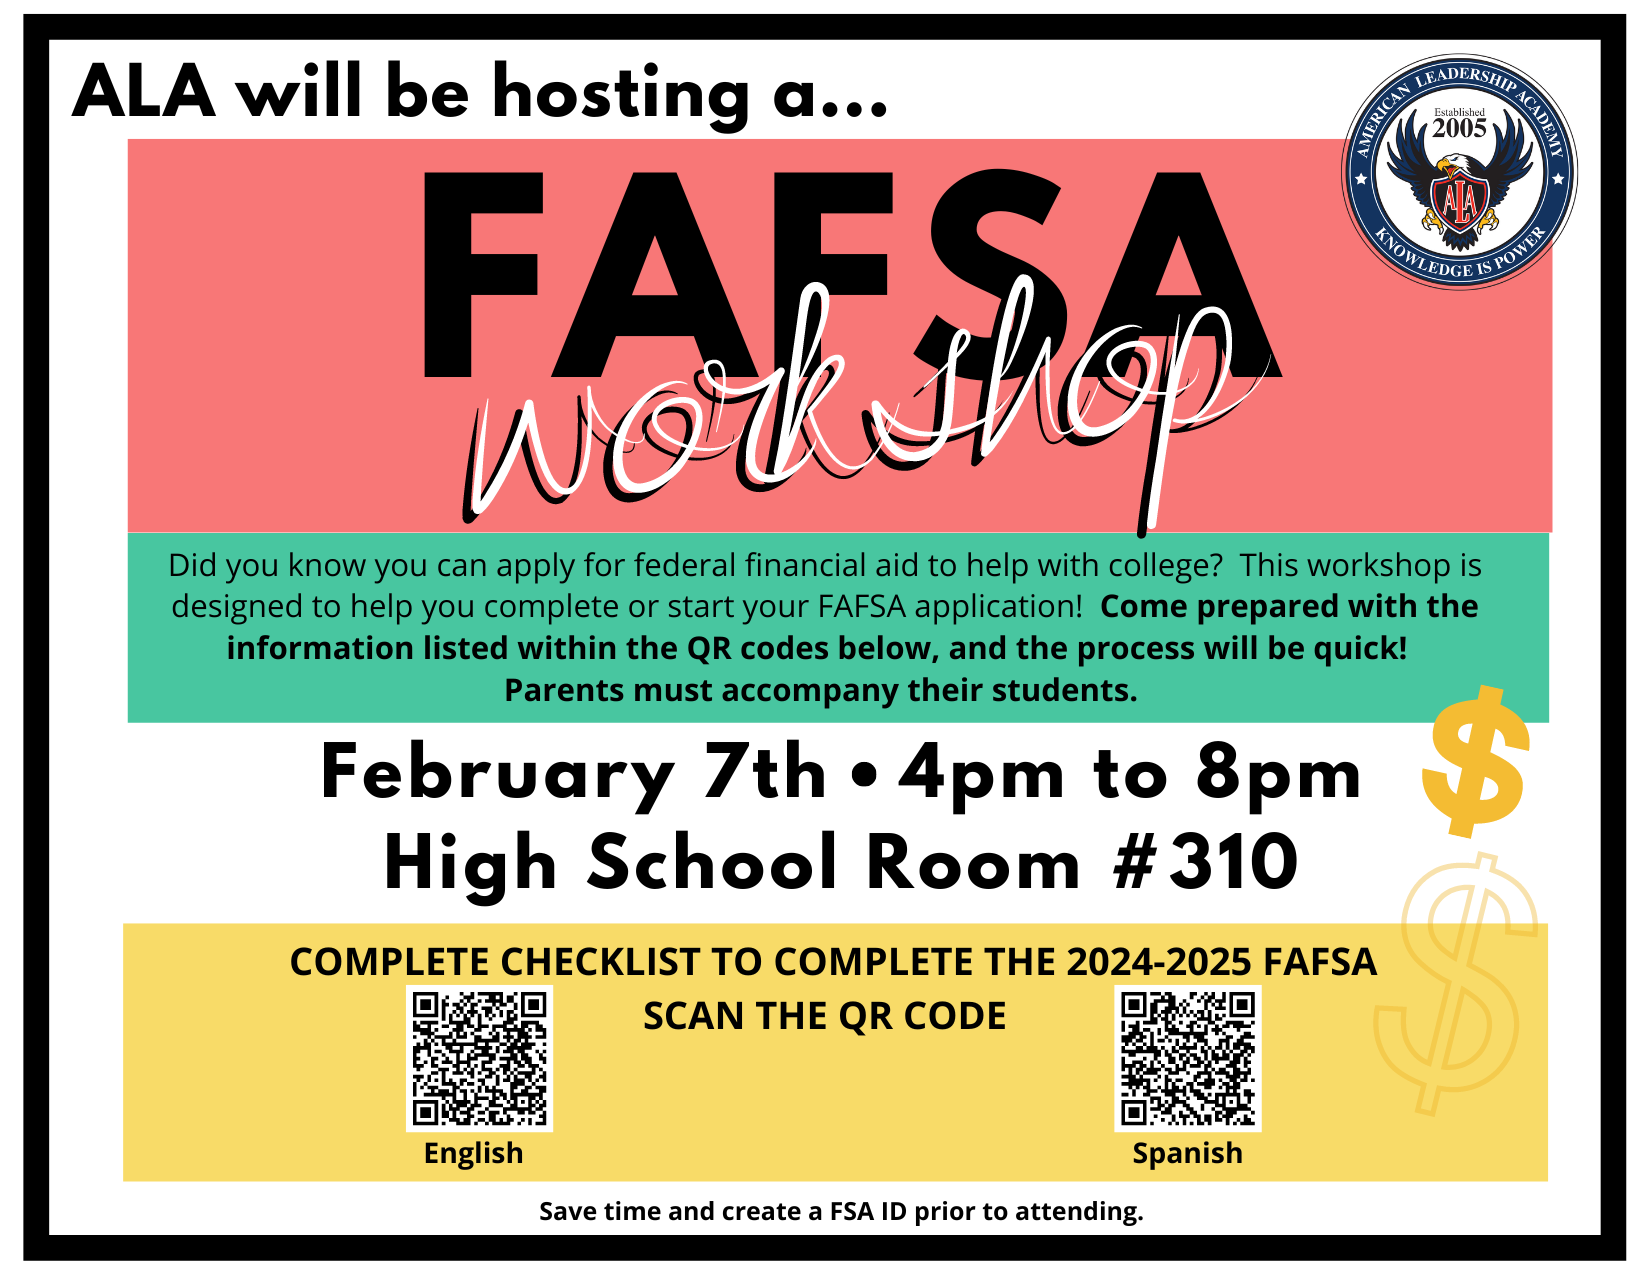 ALA will be hosting a FAFSA Workshop